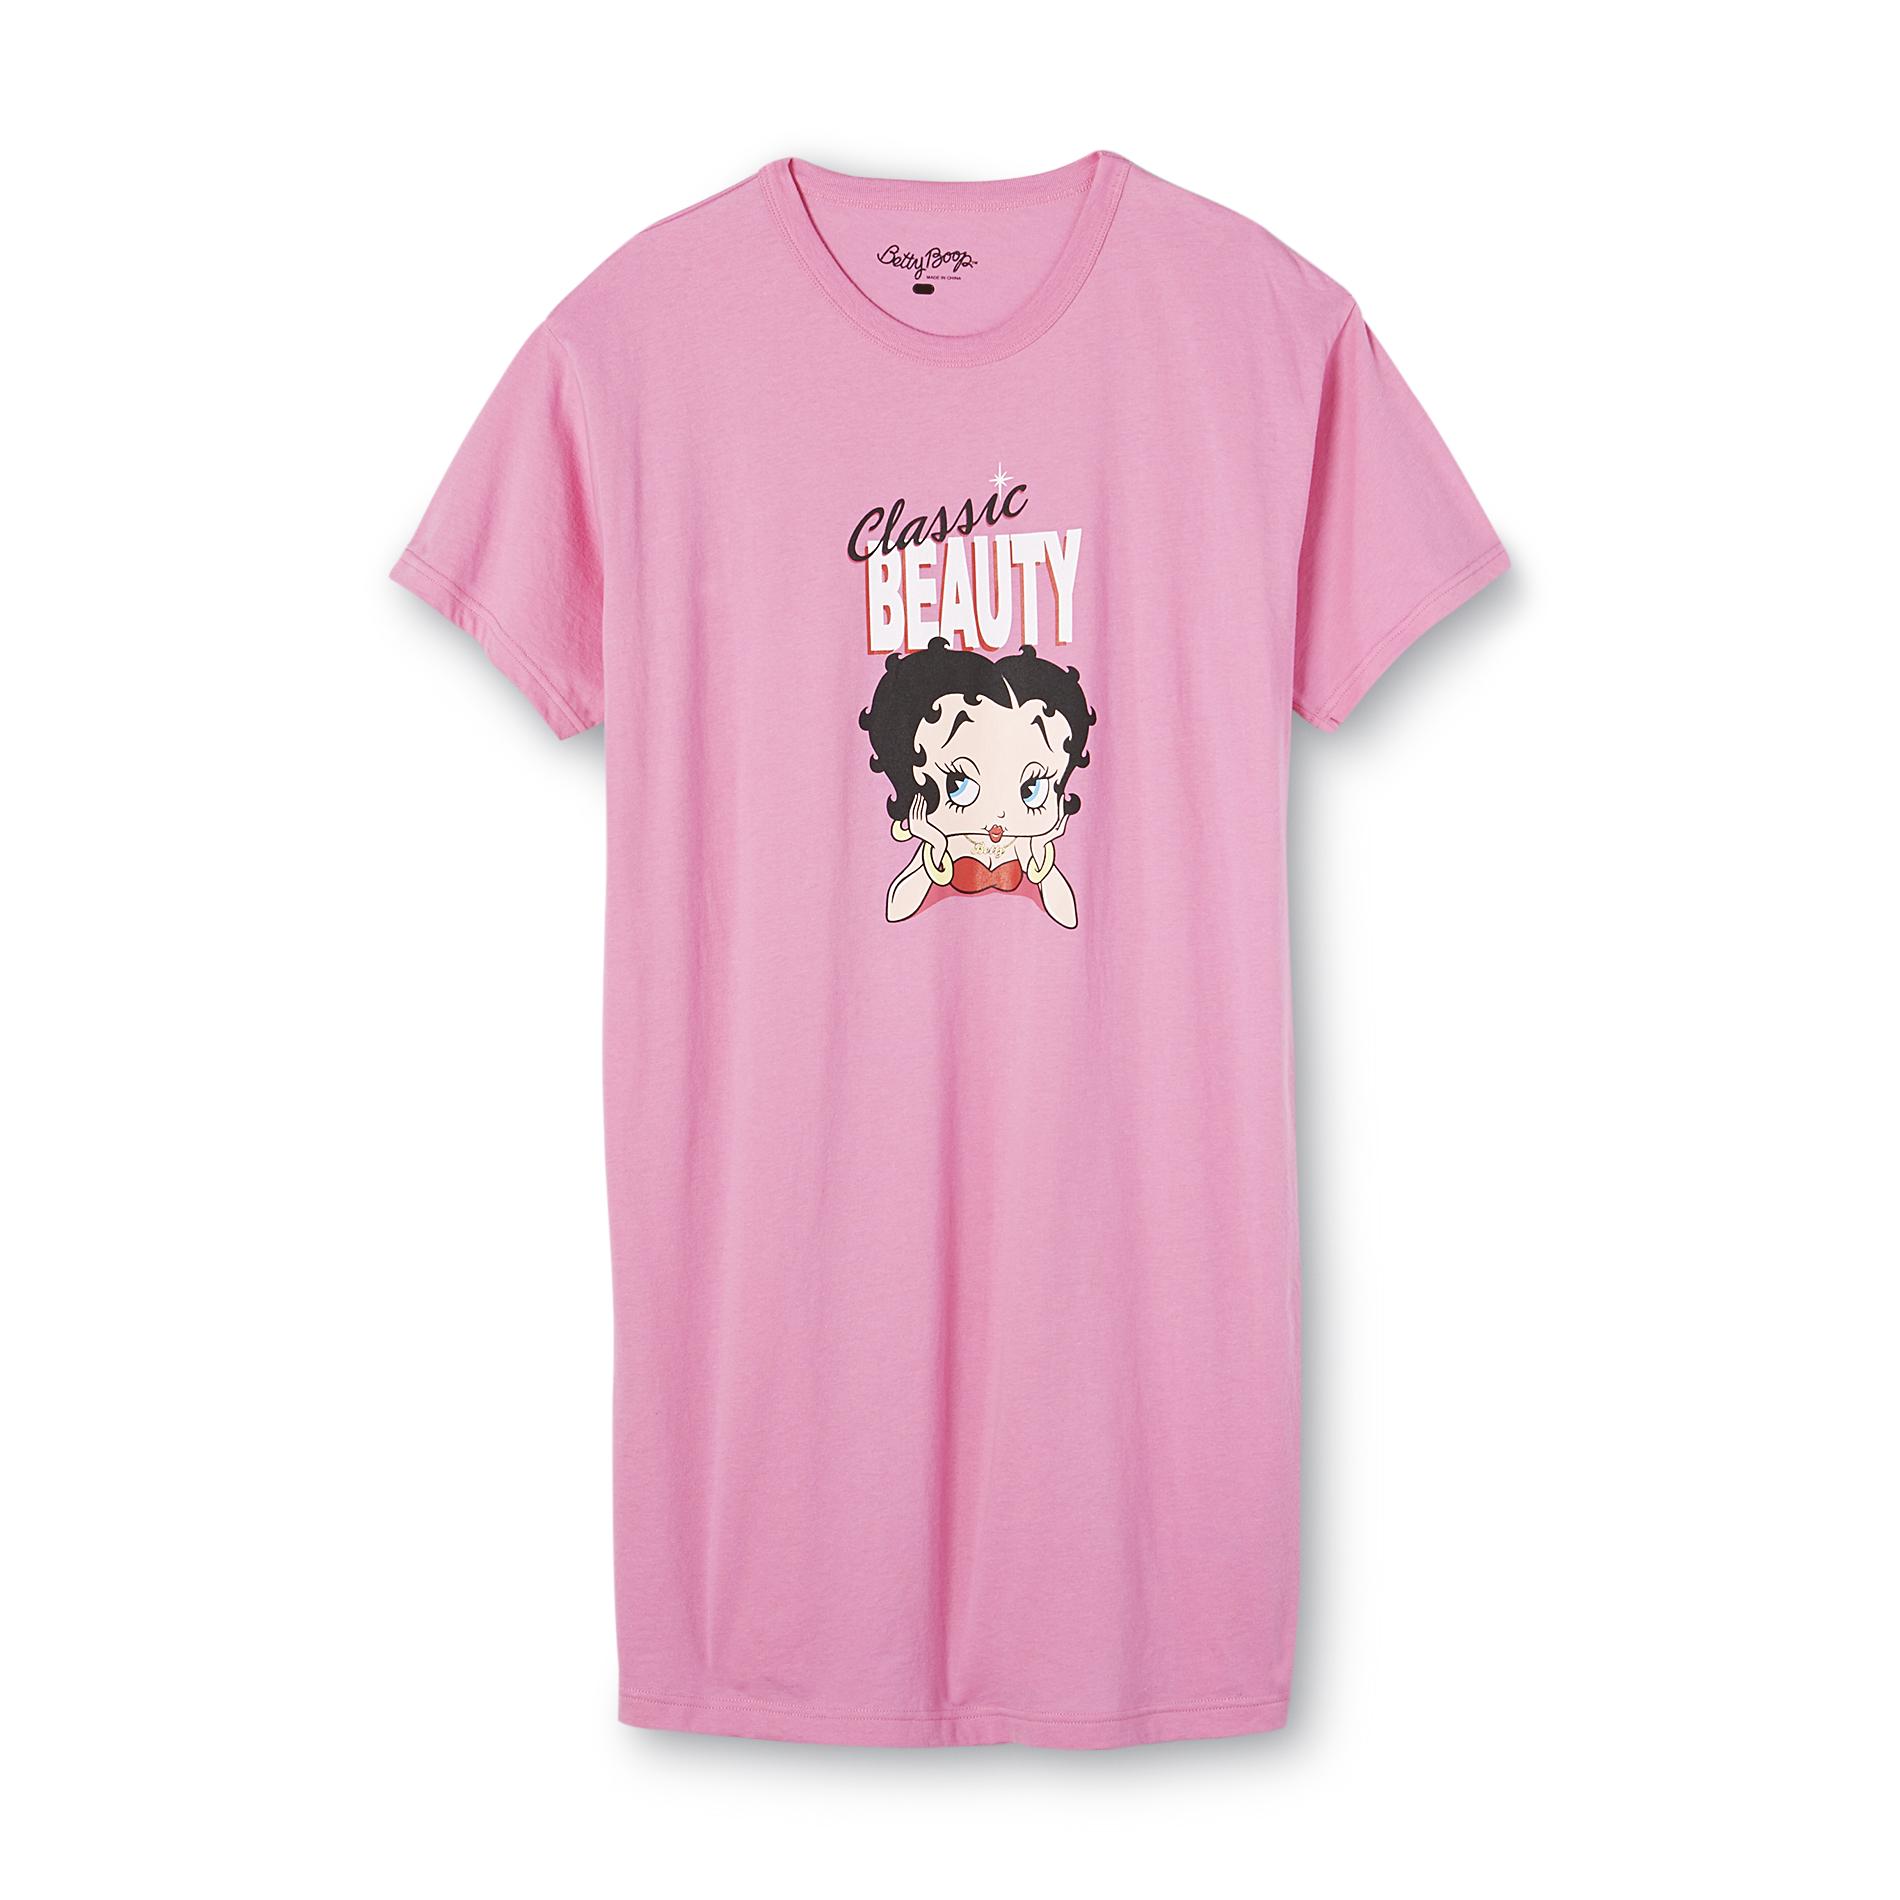 Betty Boop Women's Sleep Shirt - Classic Beauty